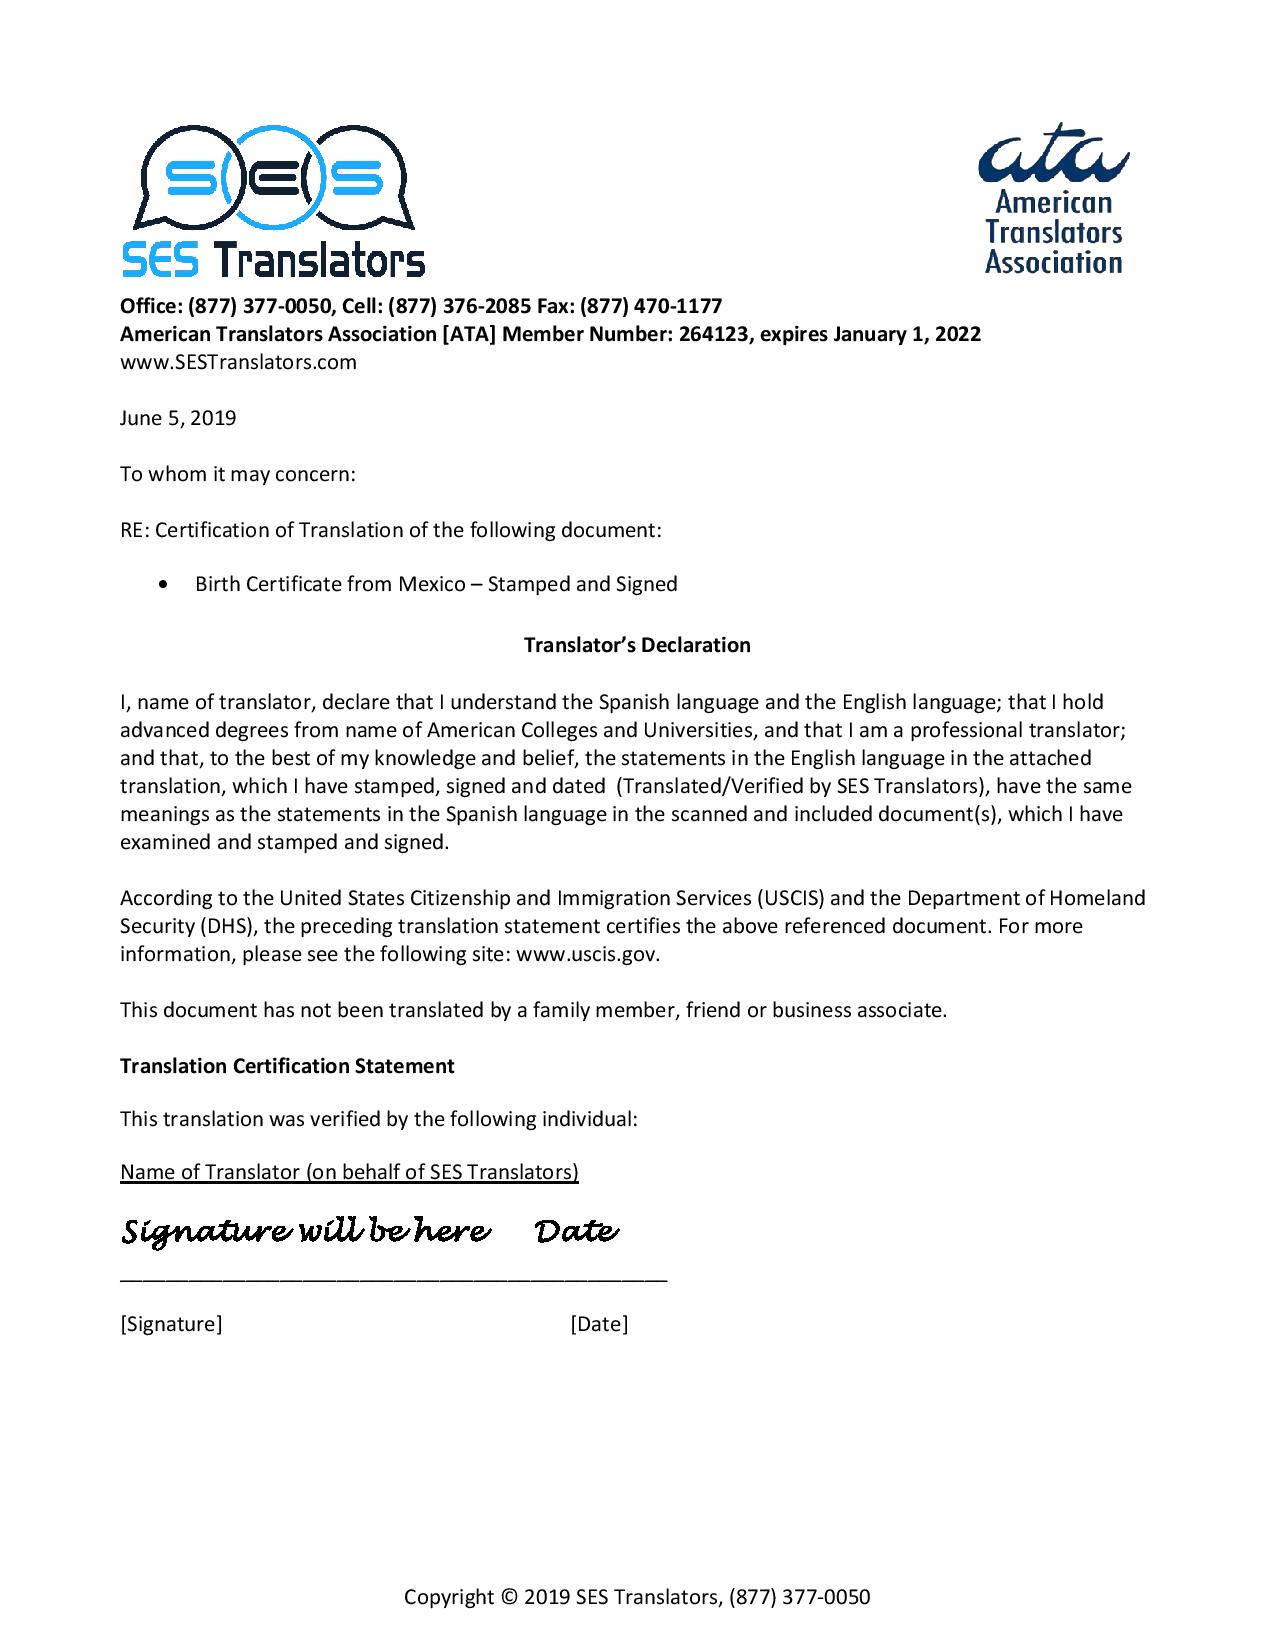 Sample Translators Affidavit